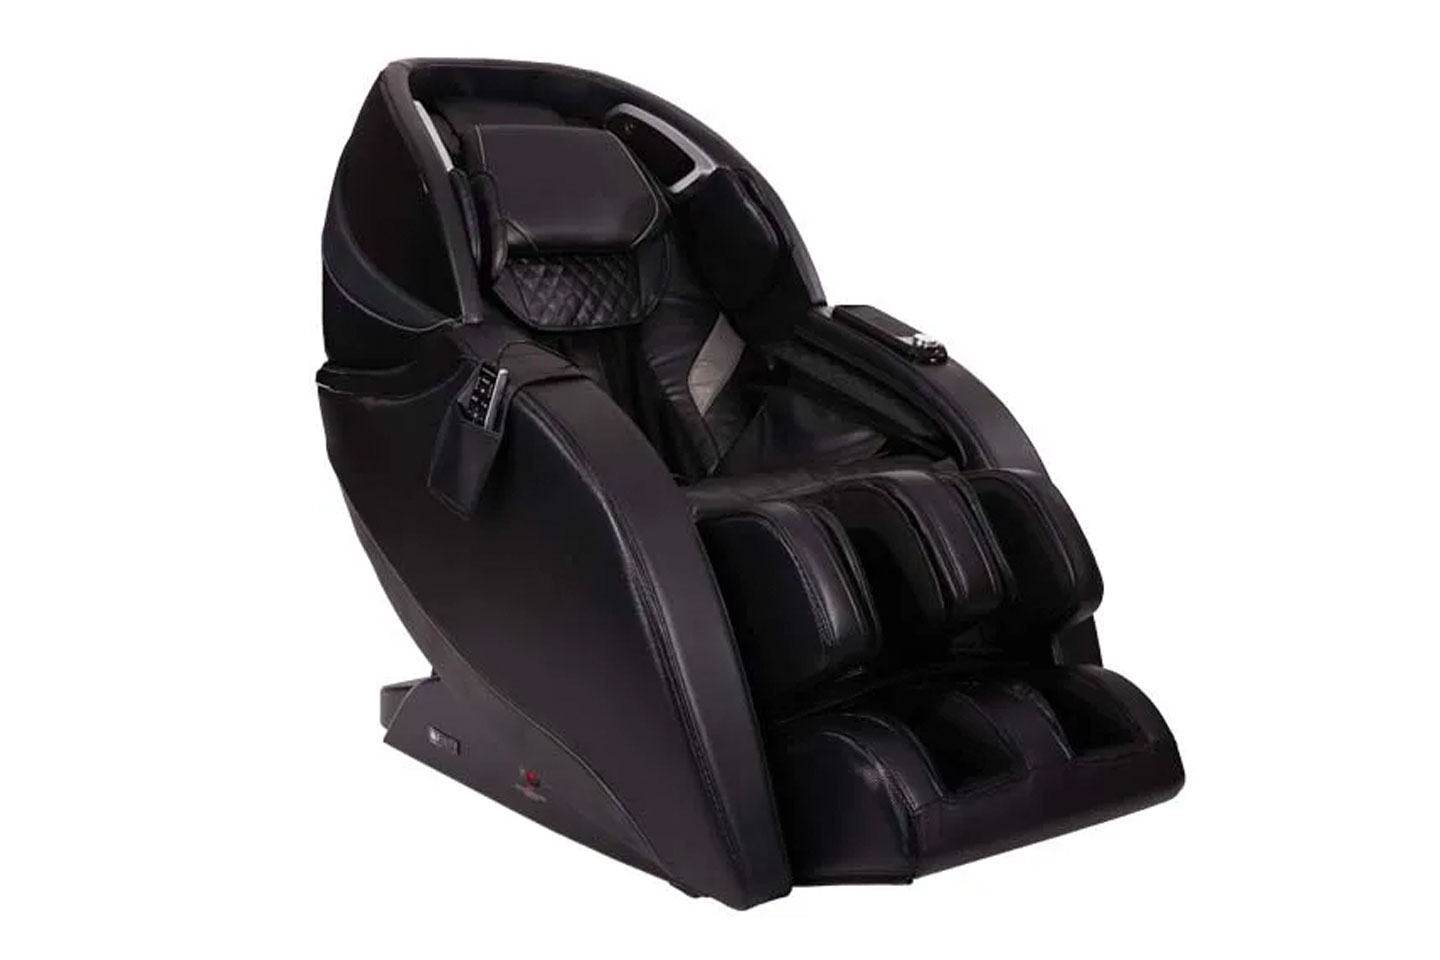 Evo Max™ 4D Massage Chair